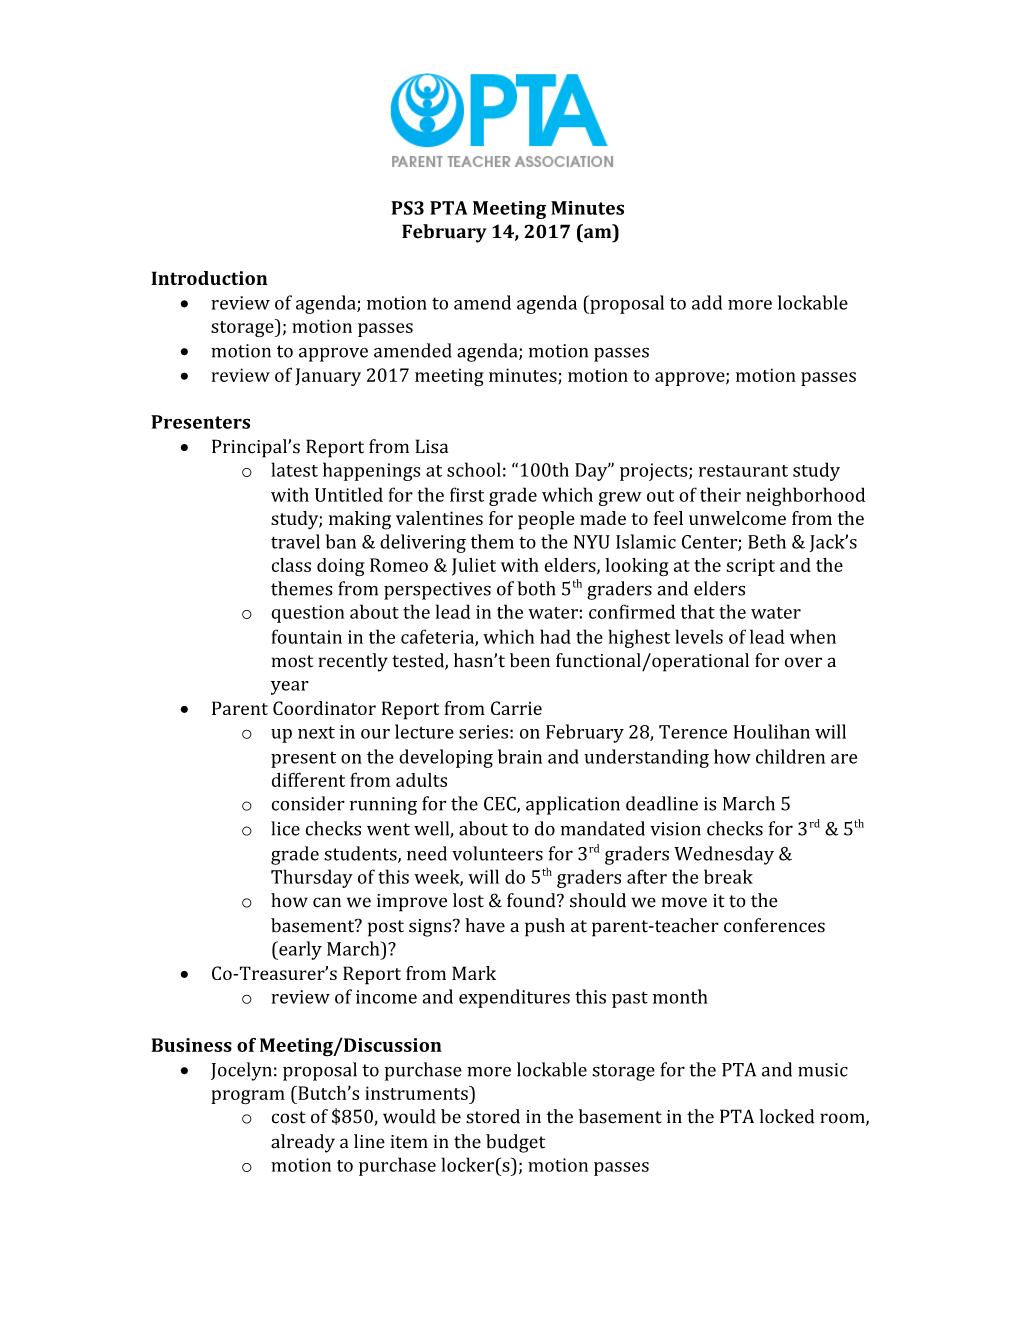 PS3 PTA Meeting Minutes